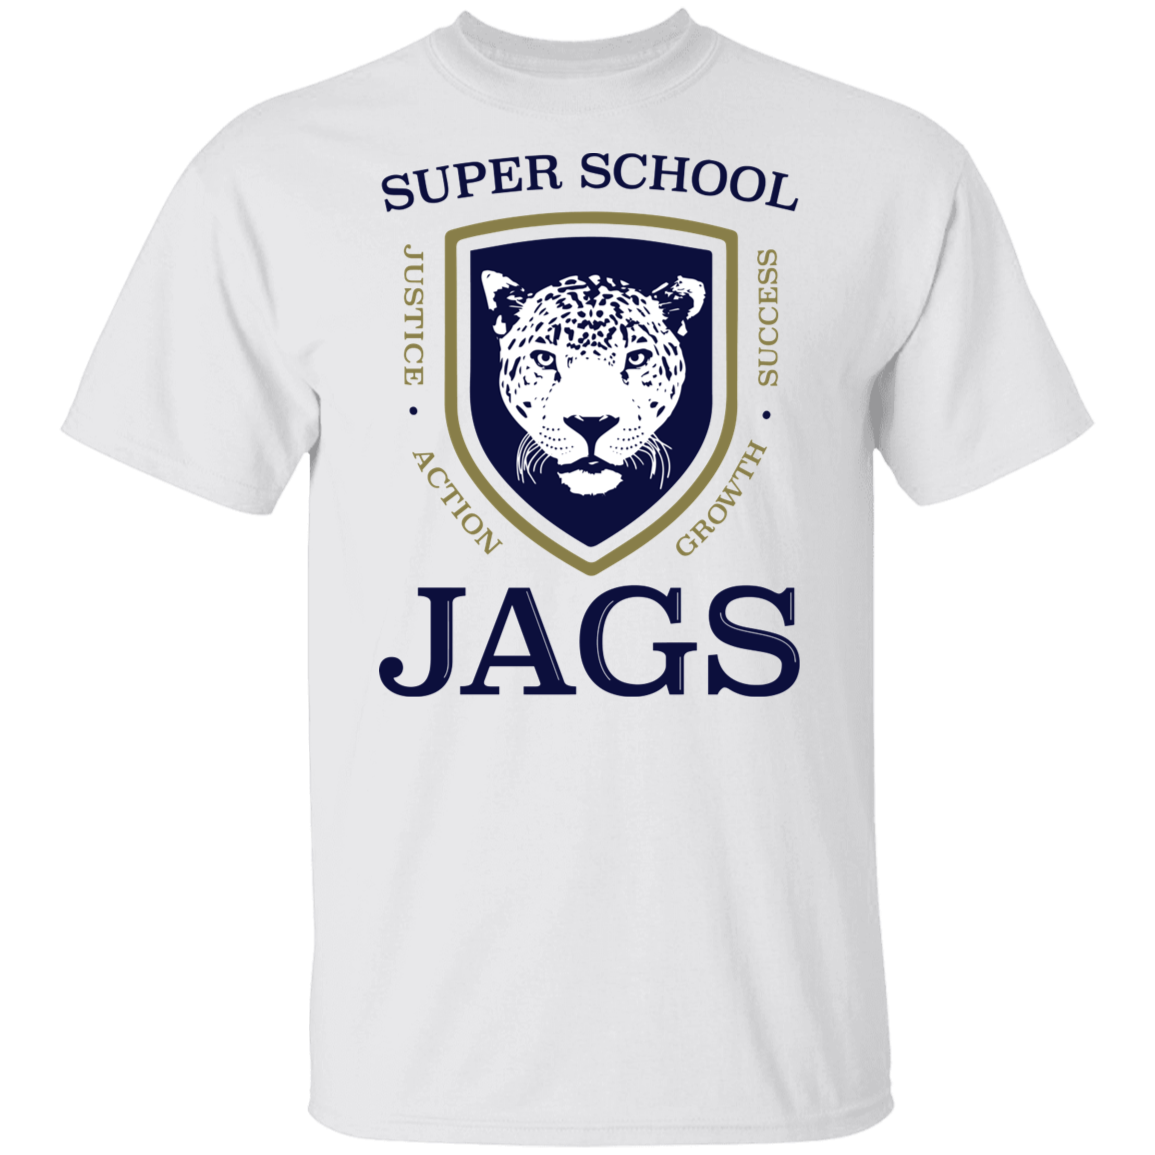 Basic T-Shirt Youth & Adult - Super School